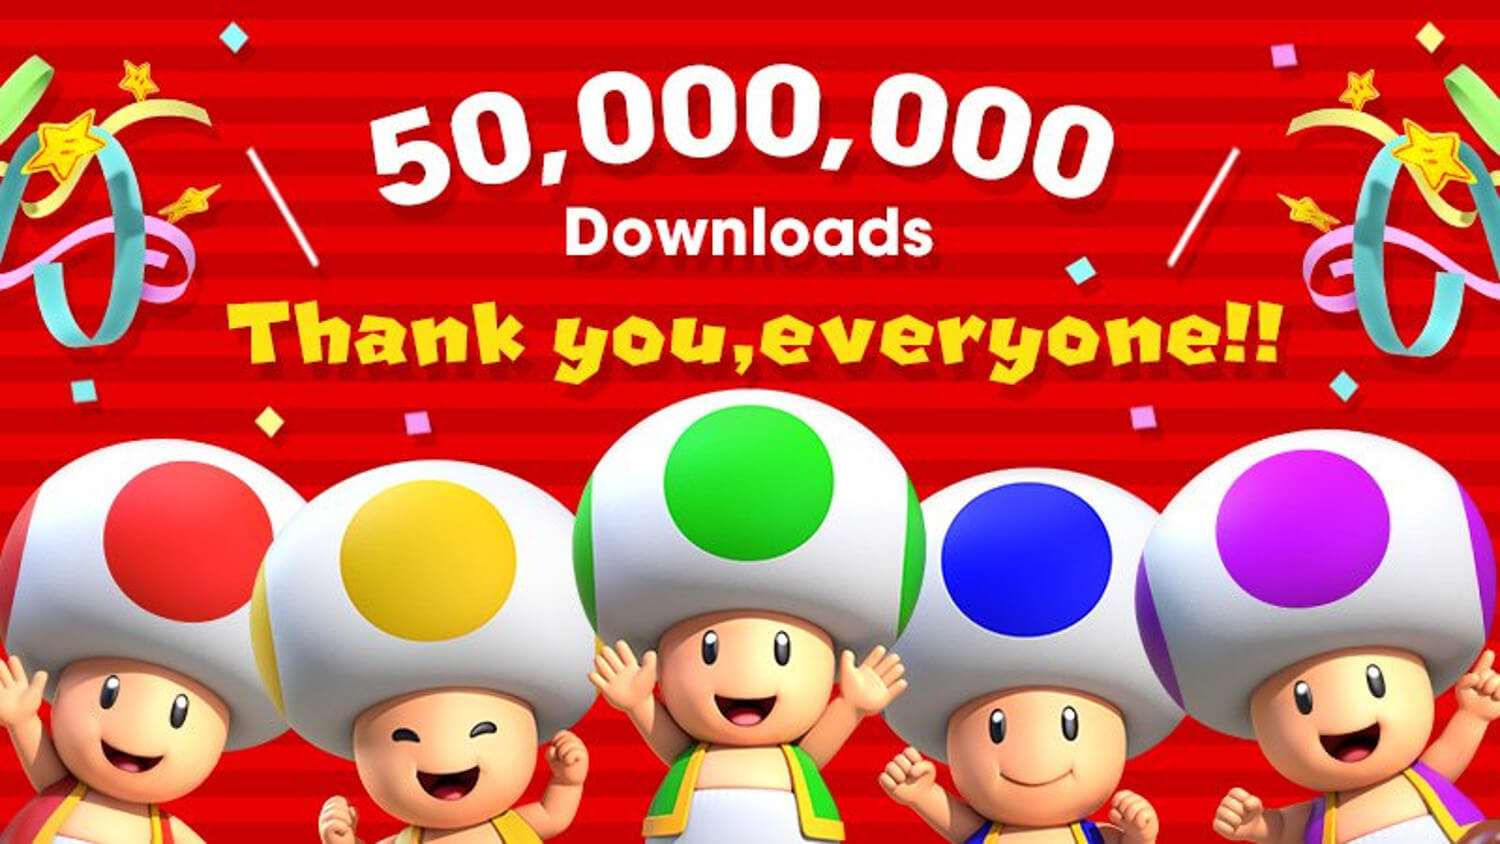 Super Mario Run ultrapassa 50 milhões de downloads